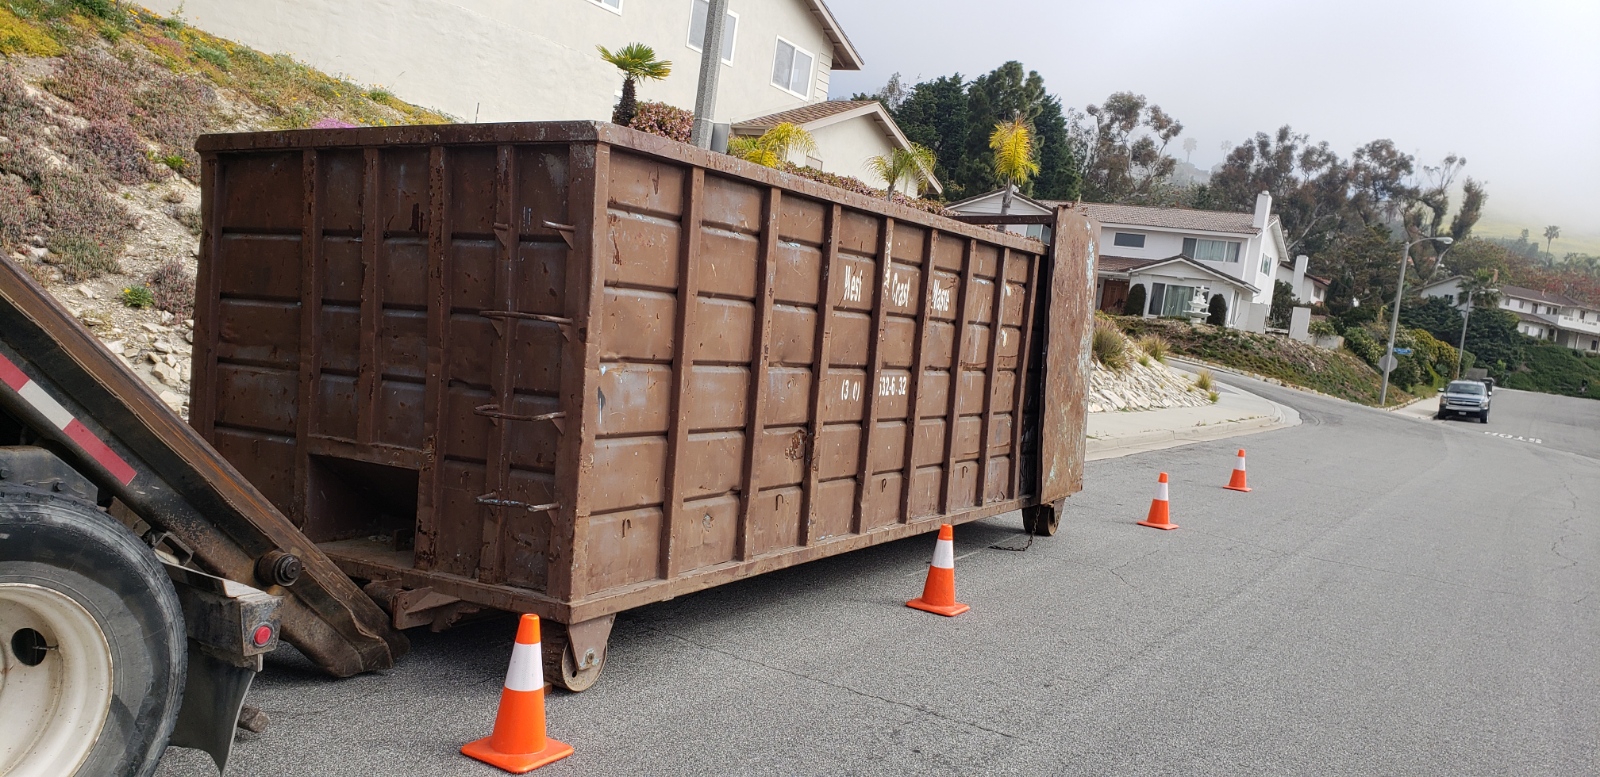 Dumpster Rental in Rancho Palos Verdes